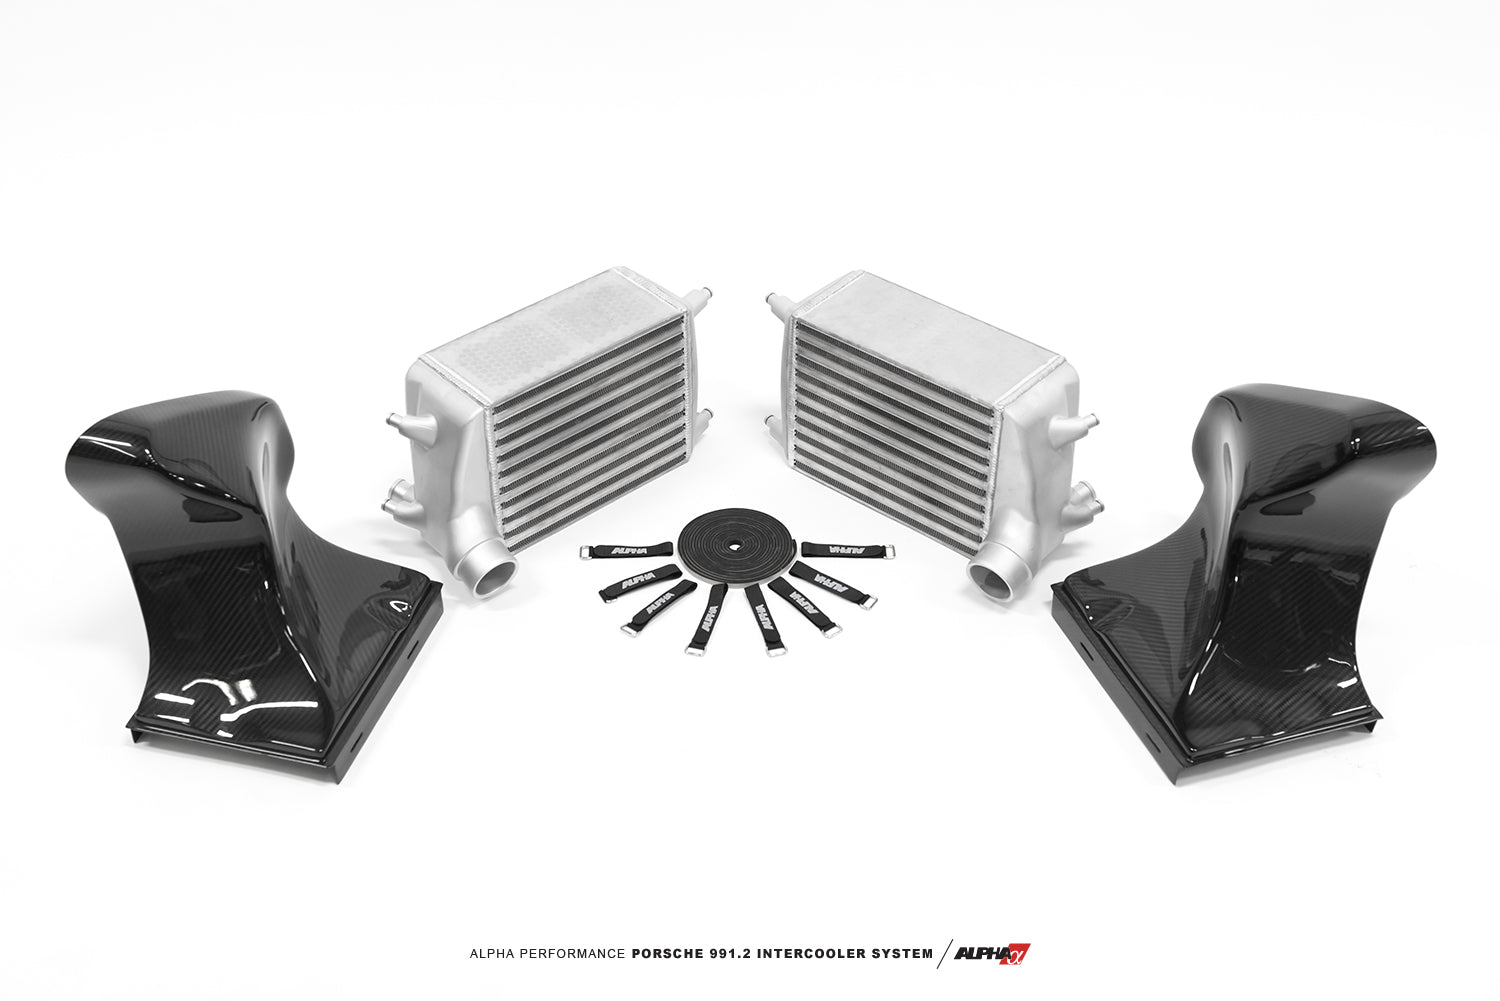 AMS ALP.26.09.0001-1 Intercooler Kit with Carbon Fiber Shrouds PORSCHE 991.2 Photo-1 